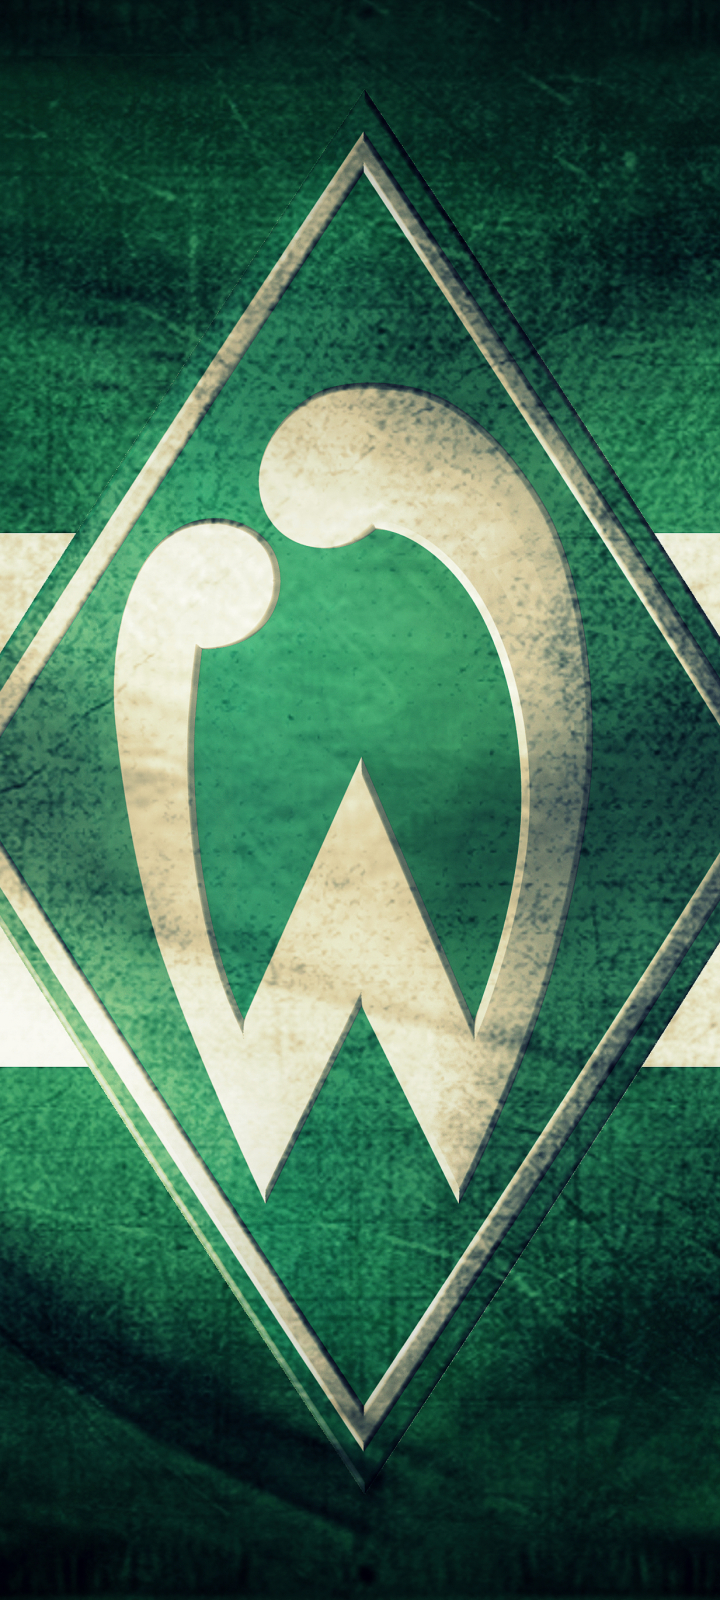 Descarga gratuita de fondo de pantalla para móvil de Fútbol, Logo, Emblema, Deporte, Sv Werder Bremen.